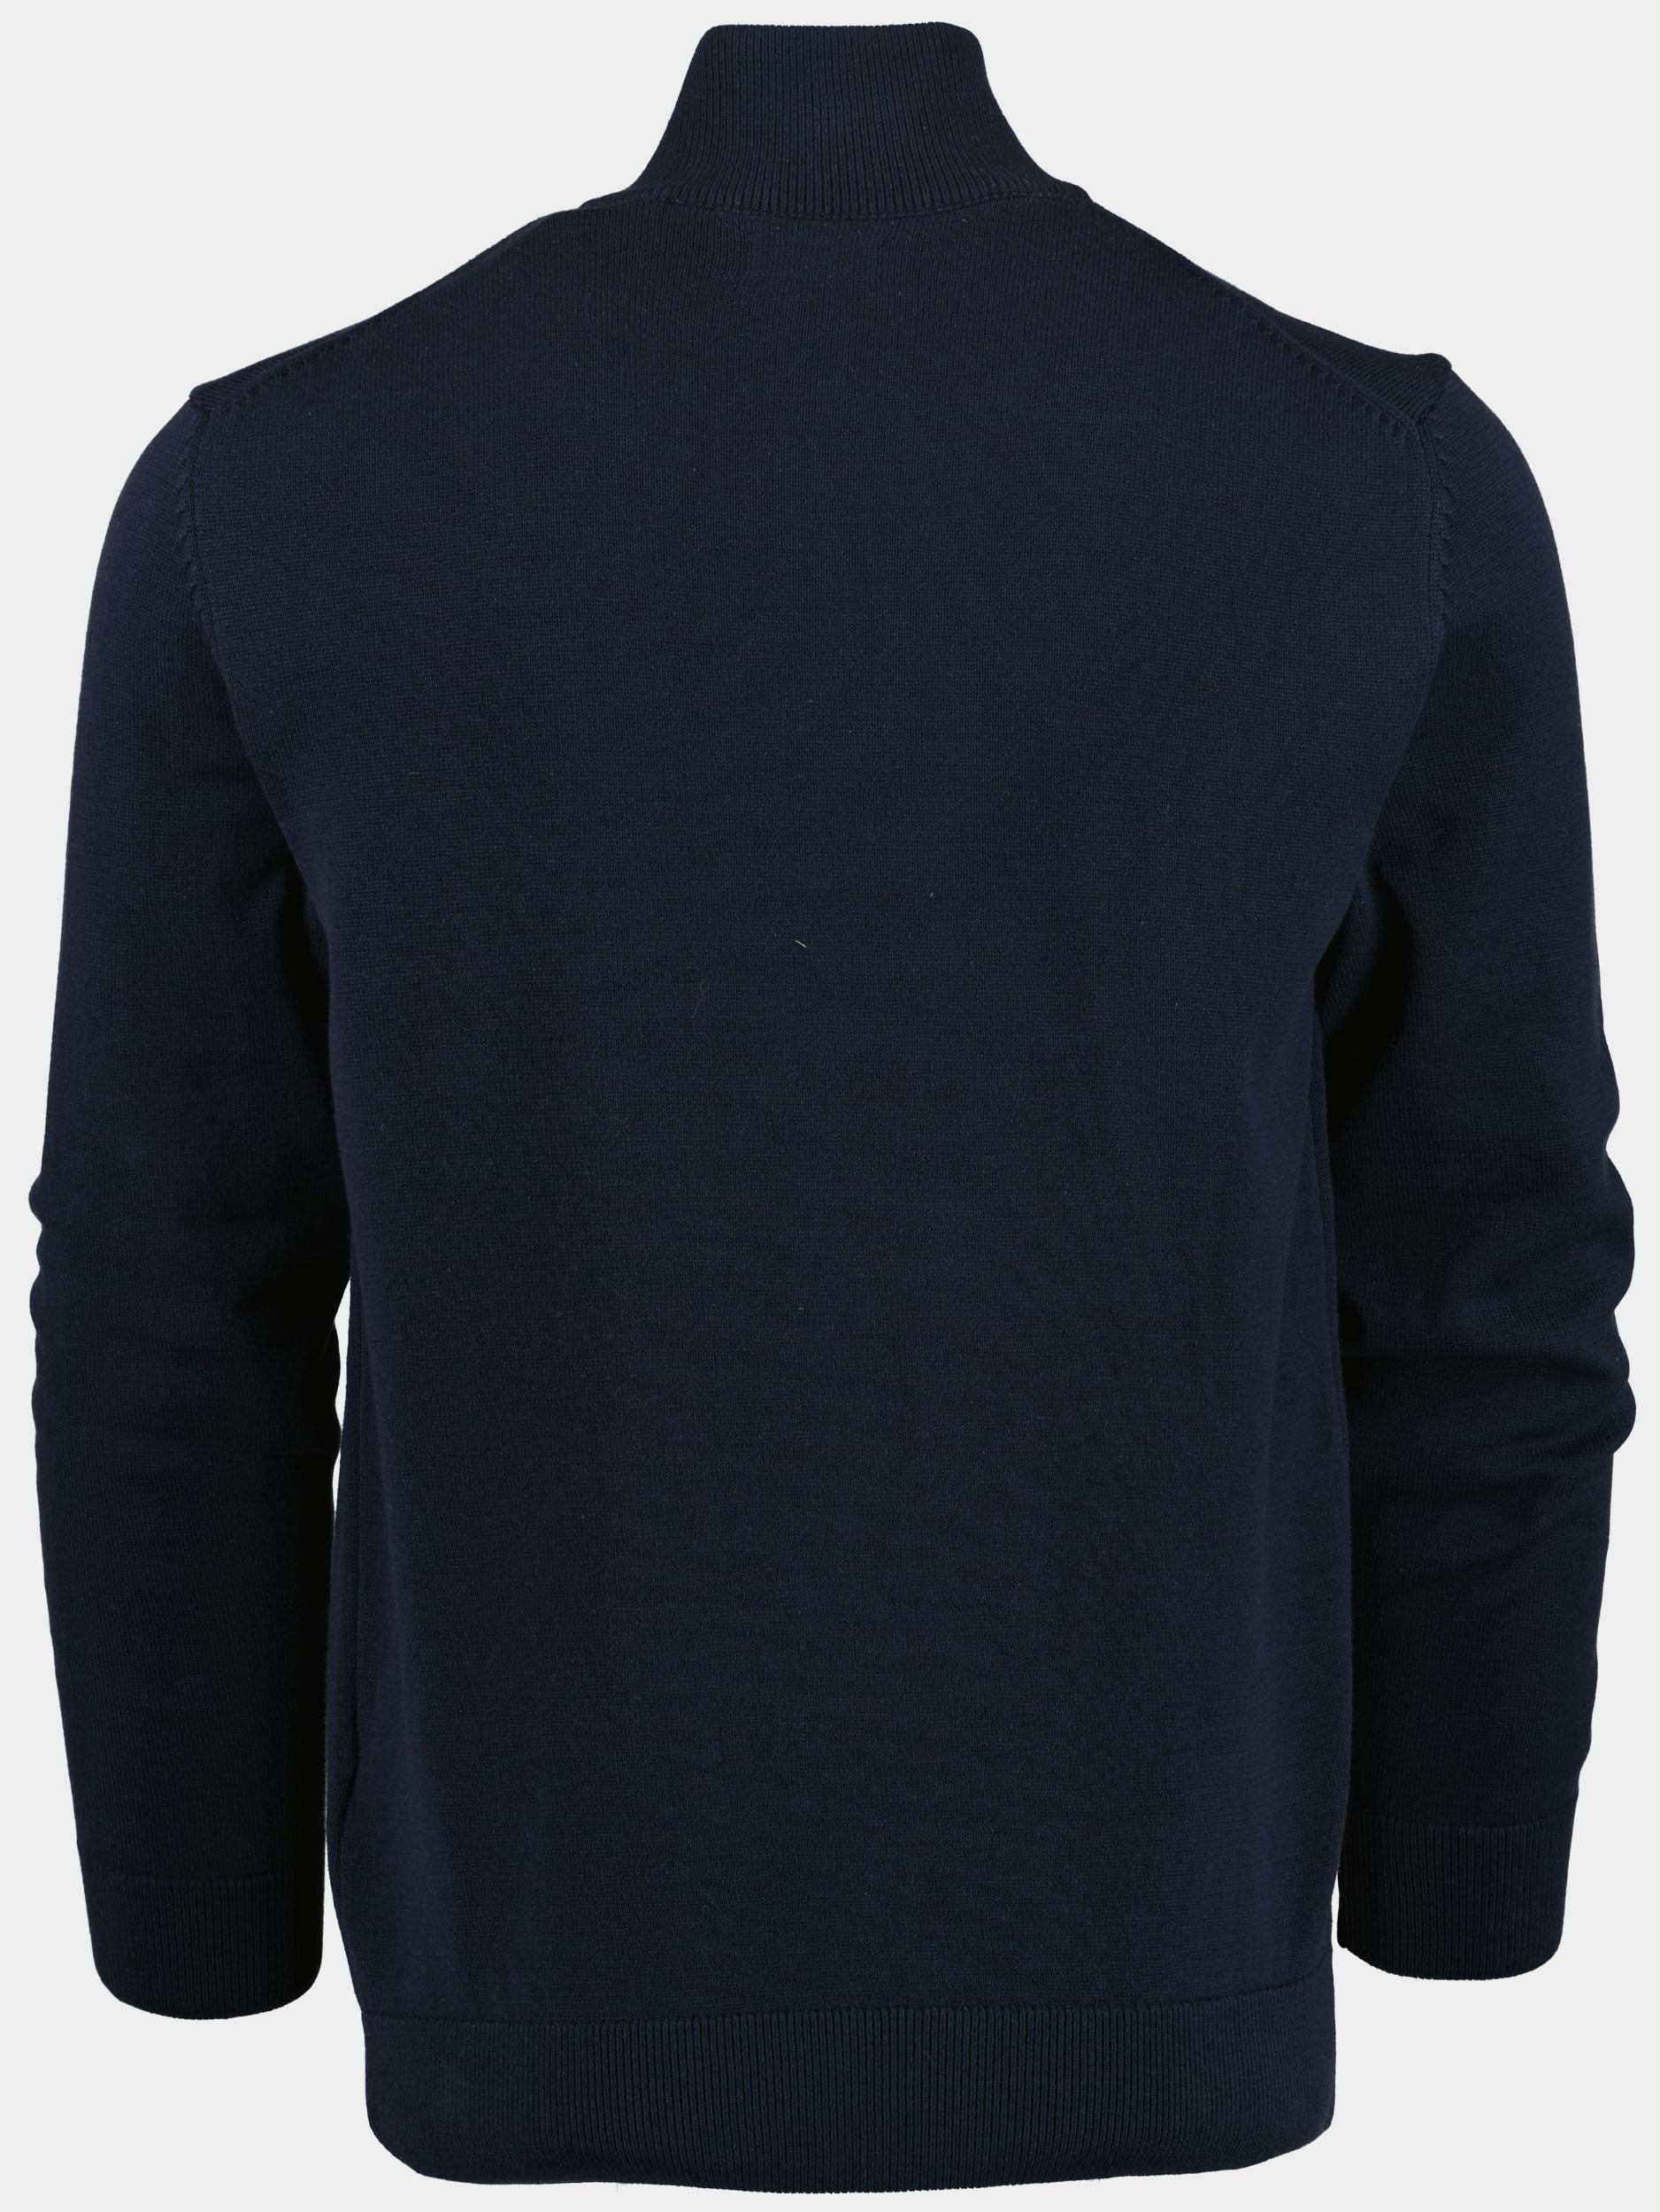 Gant Vest Blauw Casual Cotton Zip Cardigan 8030164/433